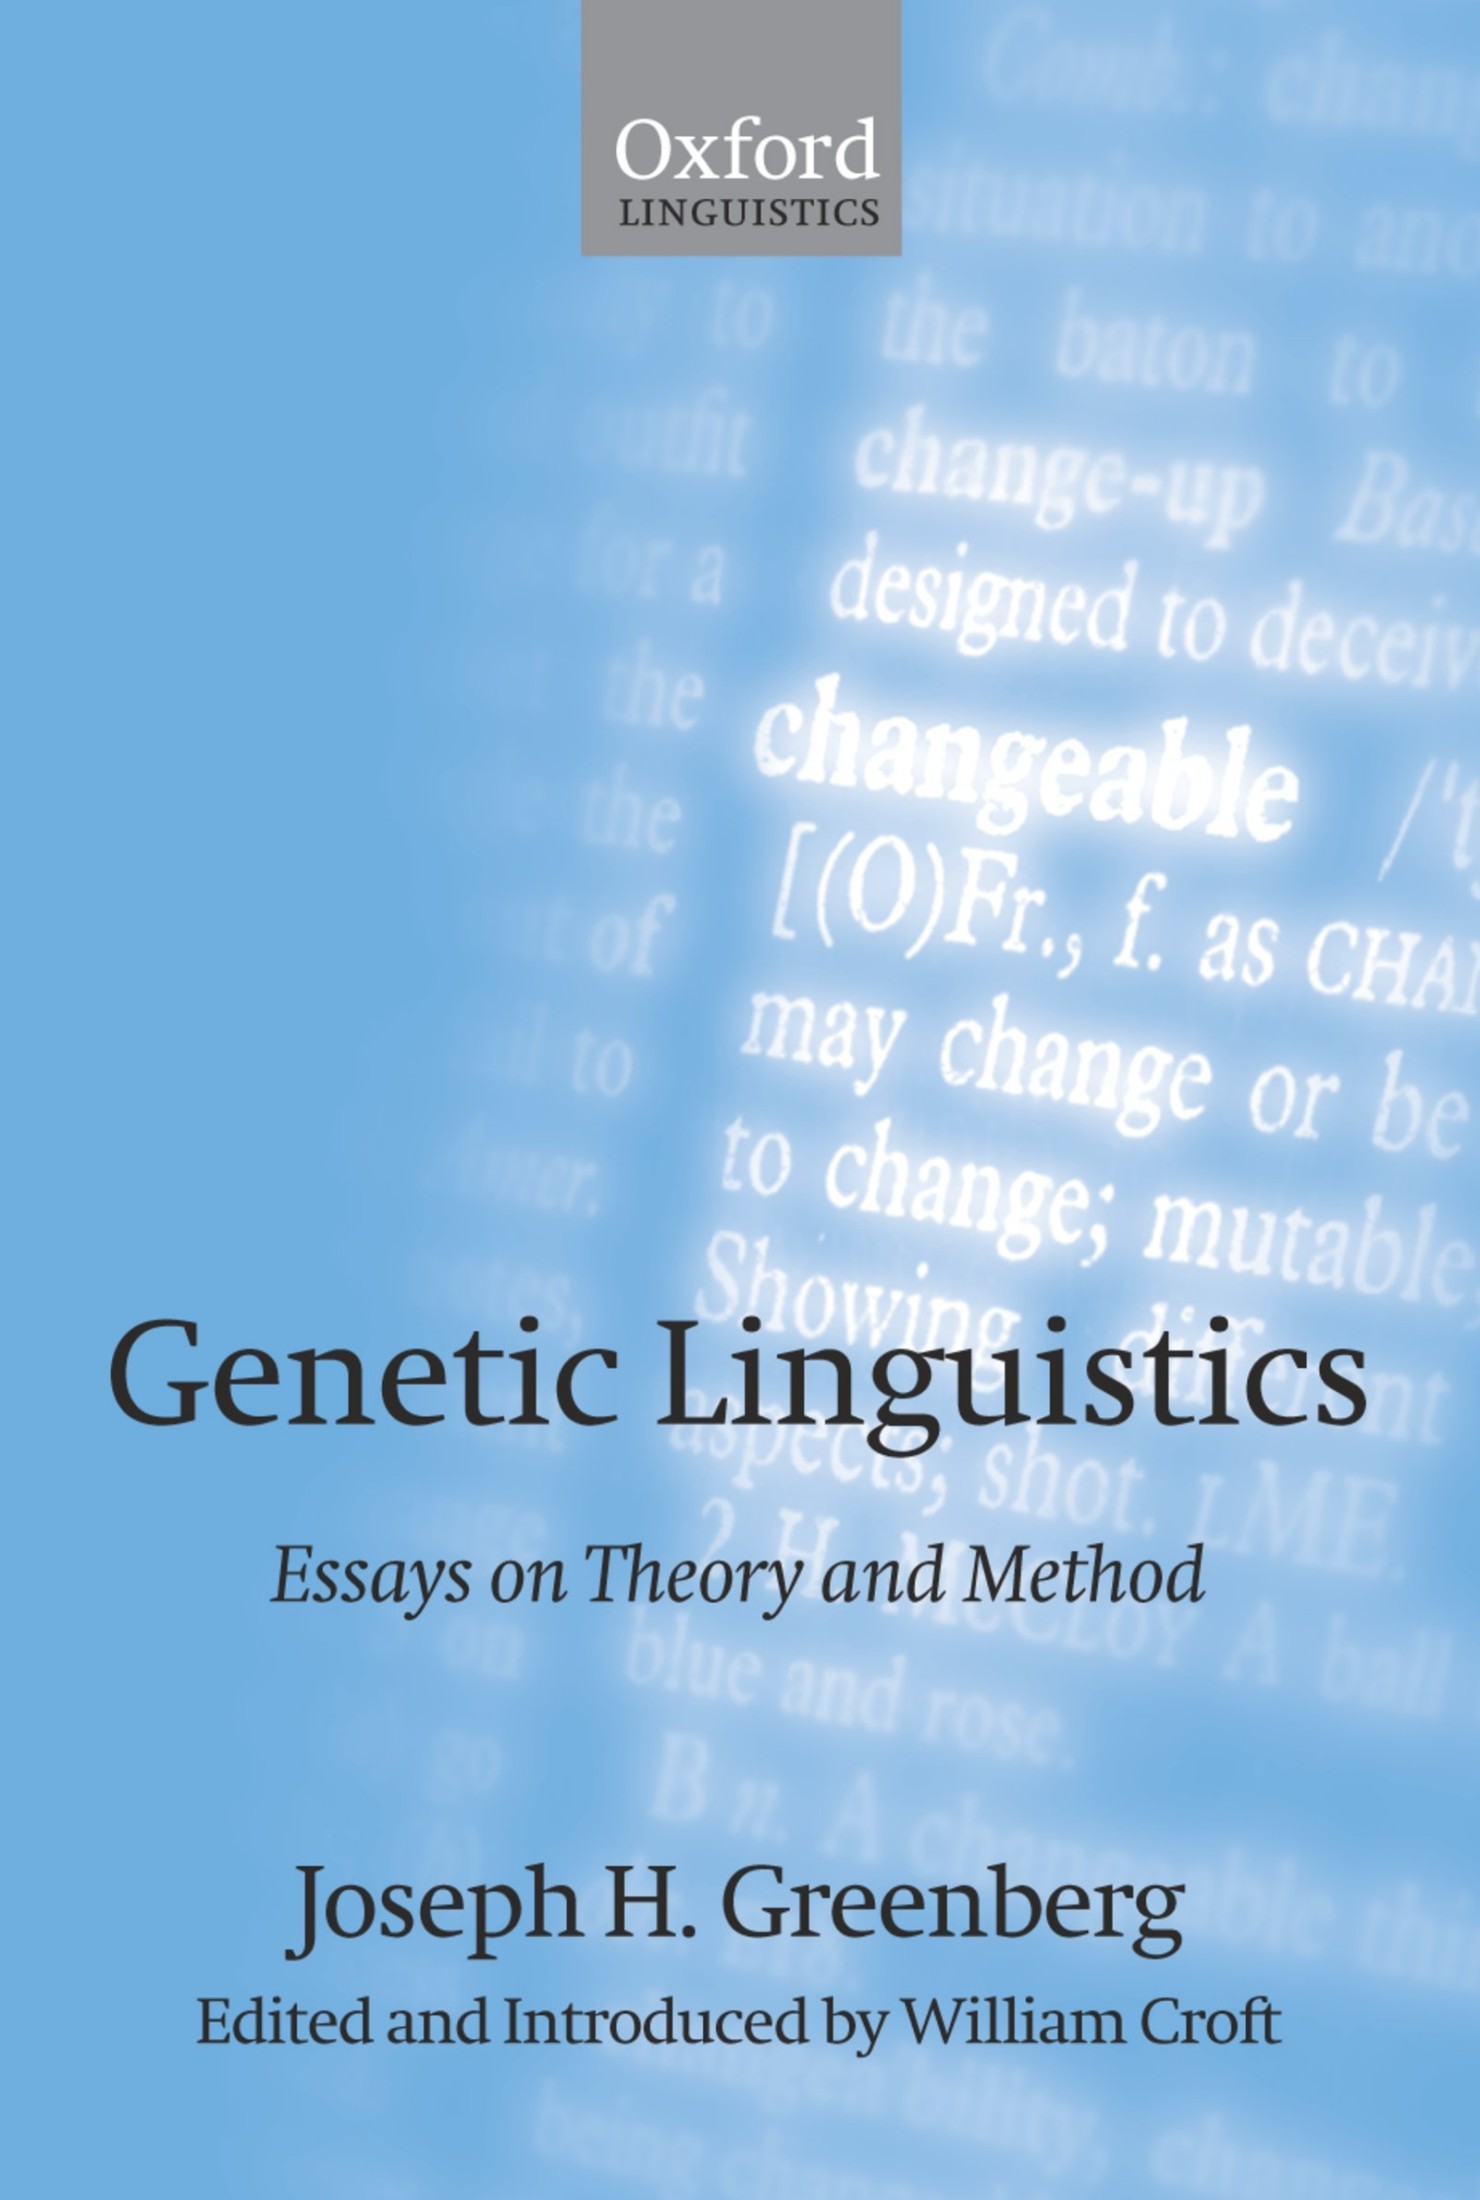 Genetic Linguistics: Essays on Theory and Method